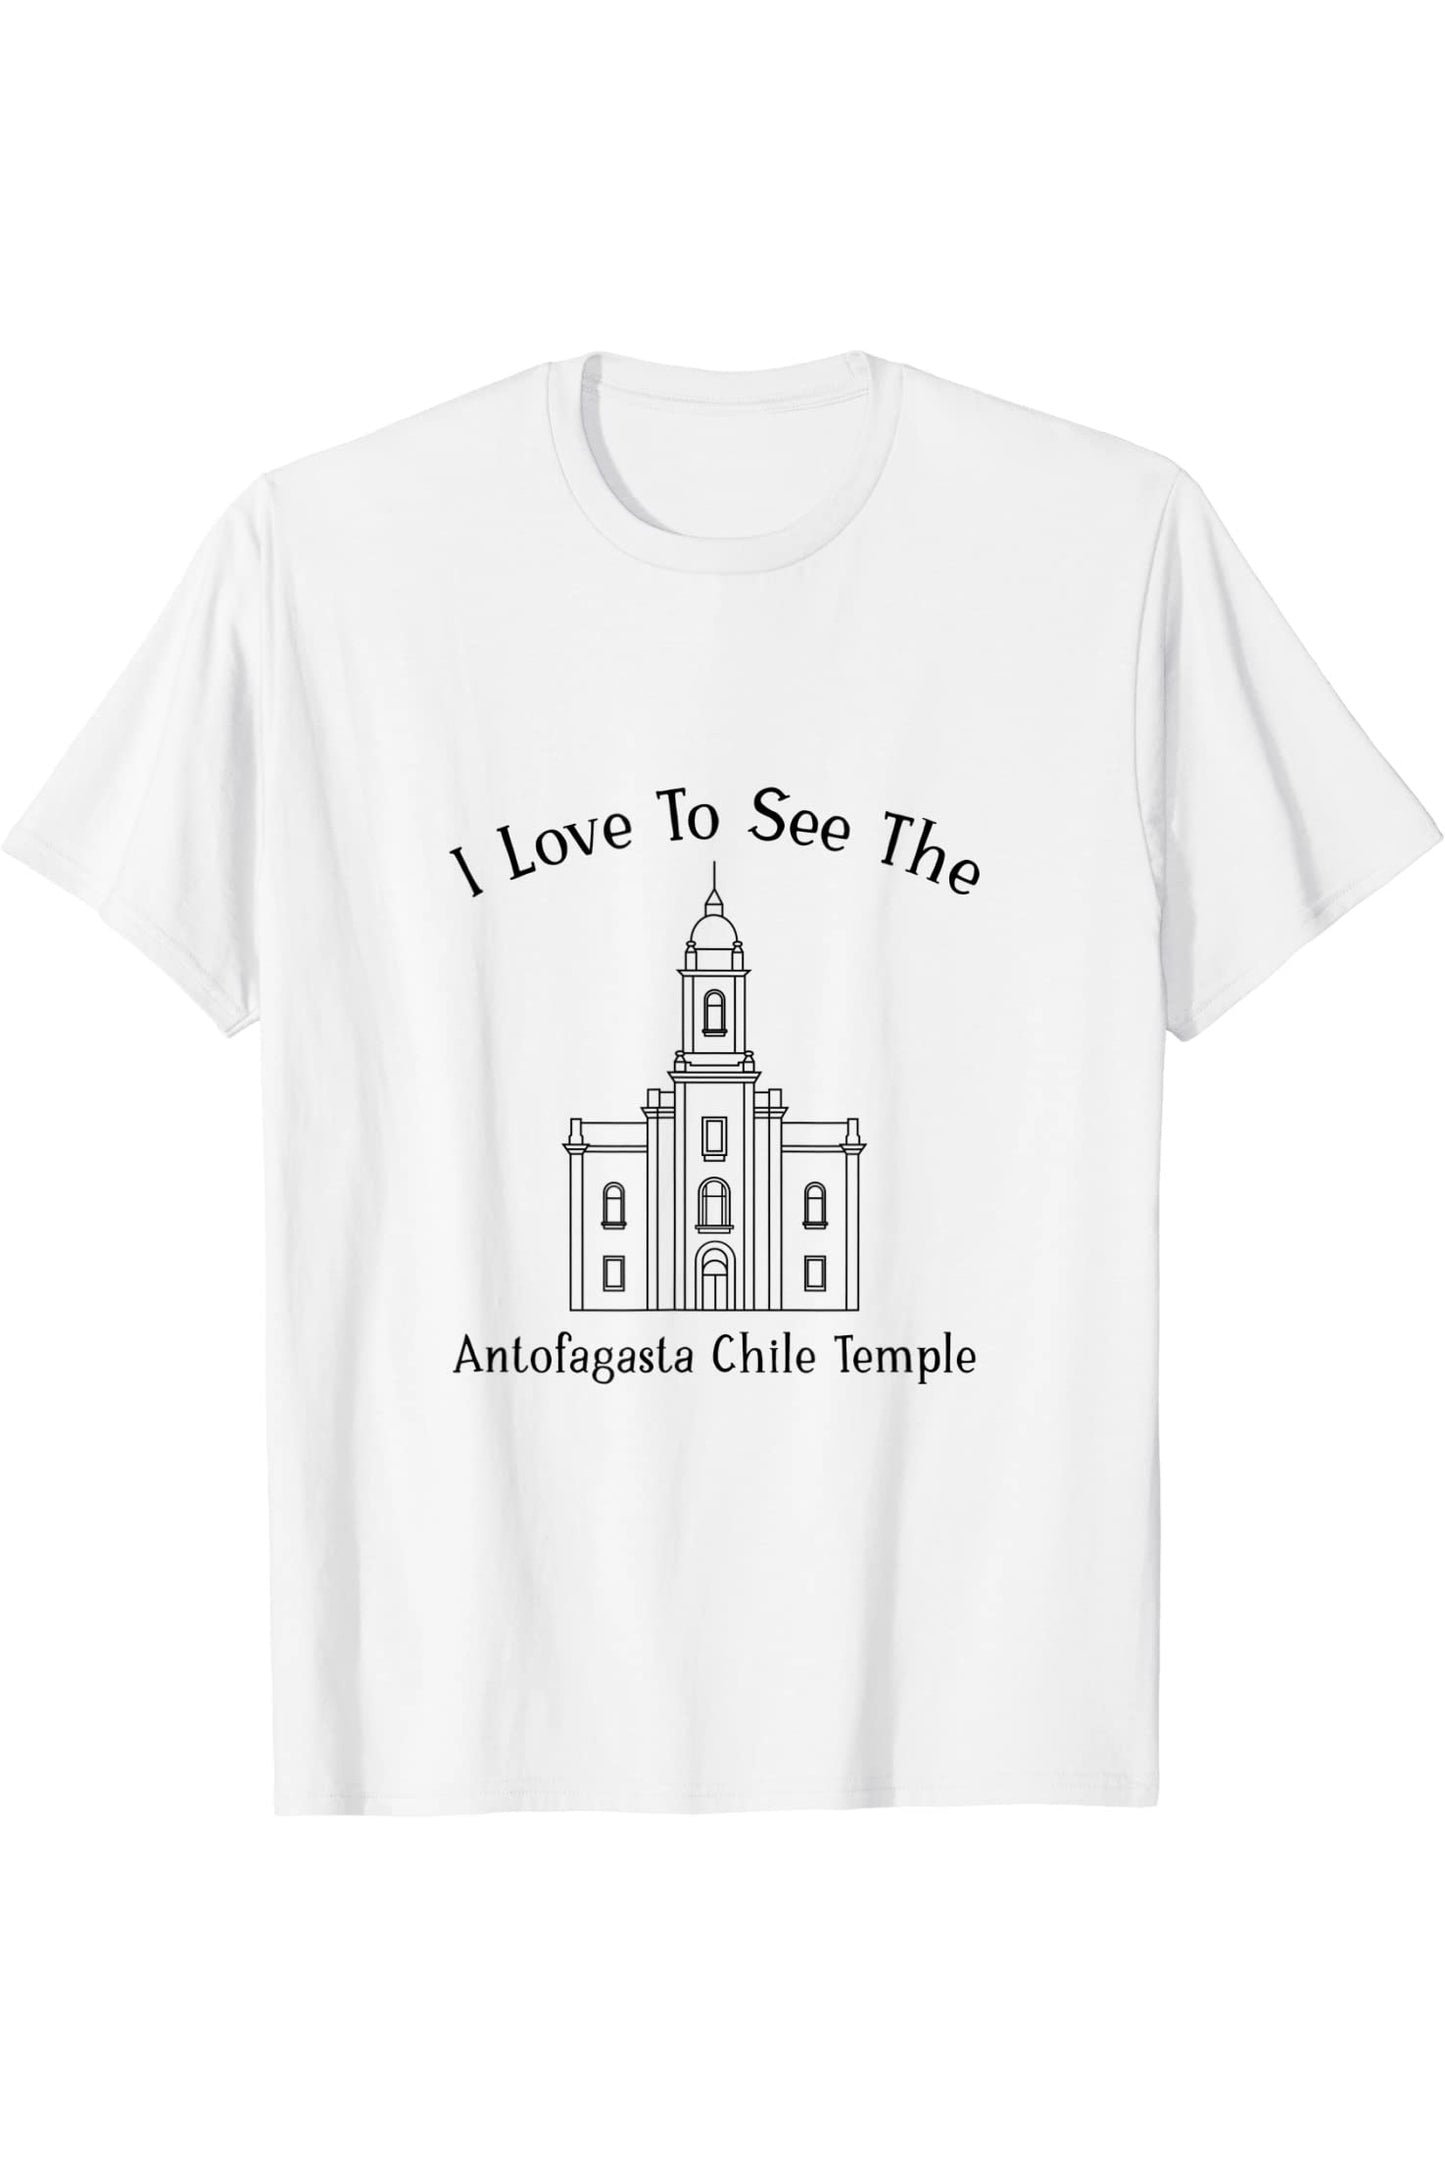 Antofagasta Chile Temple T-Shirt - Happy Style (English) US